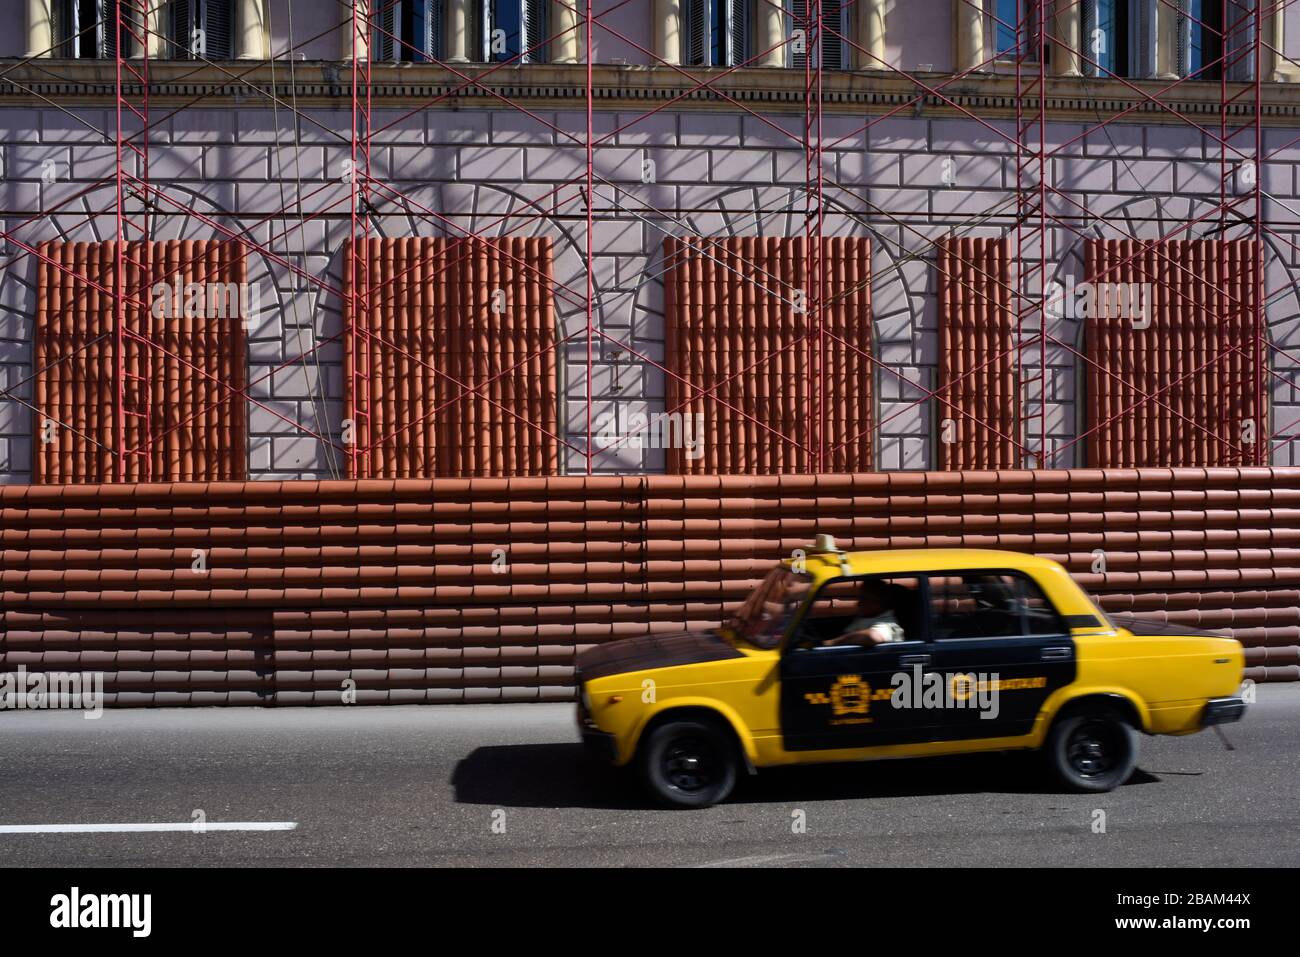 people, taxi, sidings, renovation, building, street, 2014, Cuba Stock Photo